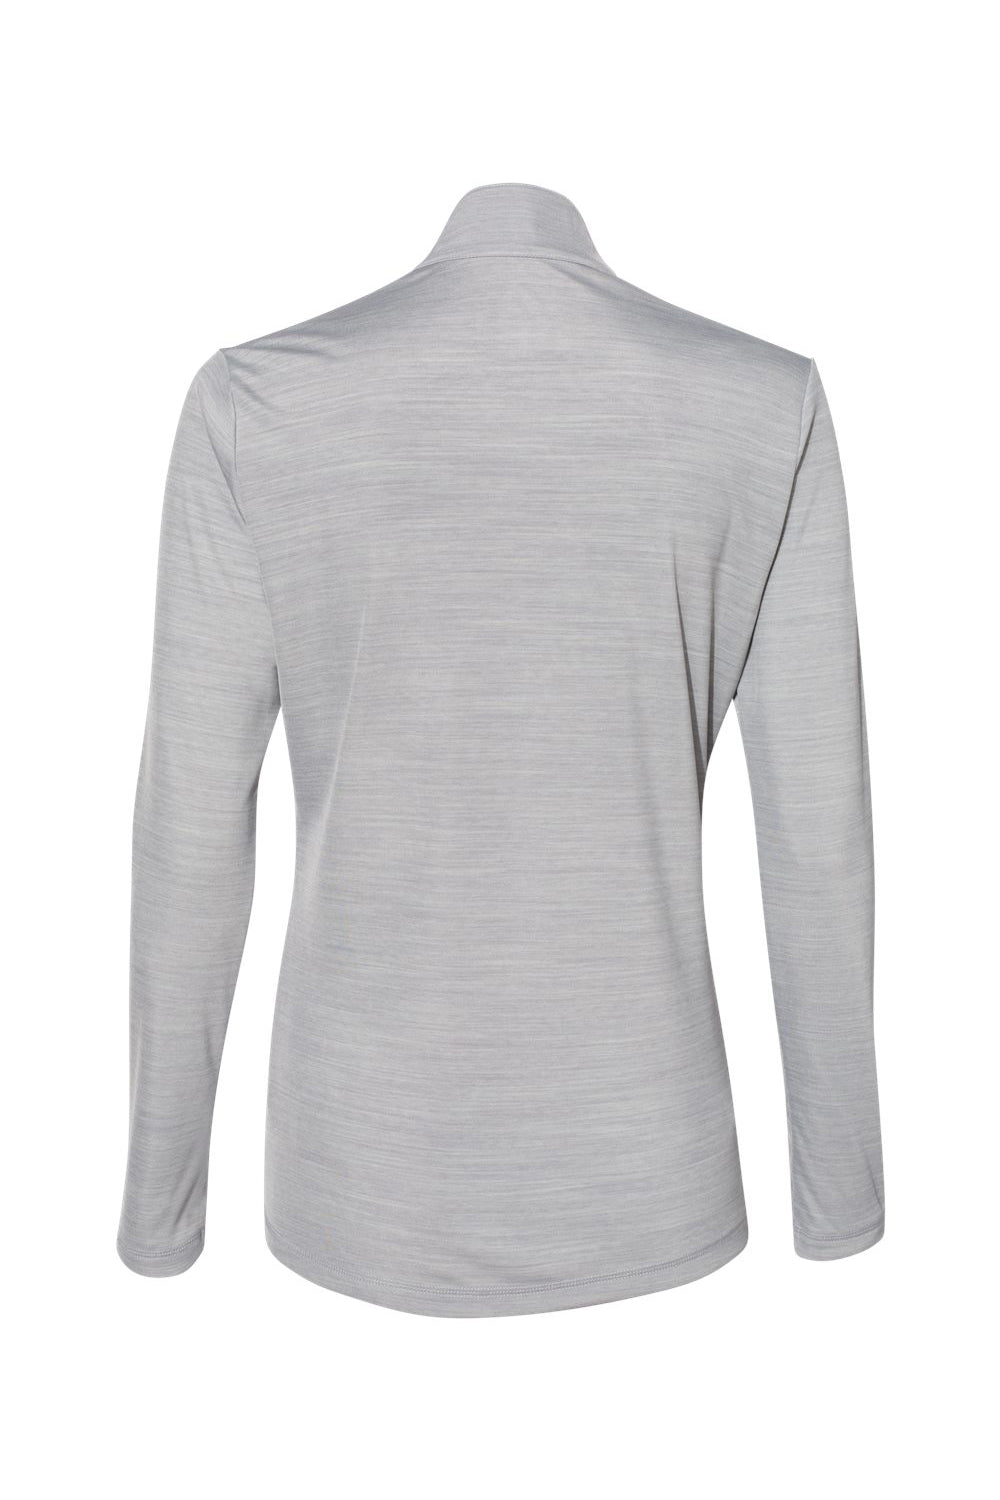 Adidas A476 Womens Moisture Wicking 1/4 Zip Sweatshirt Mid Grey Melange Flat Back